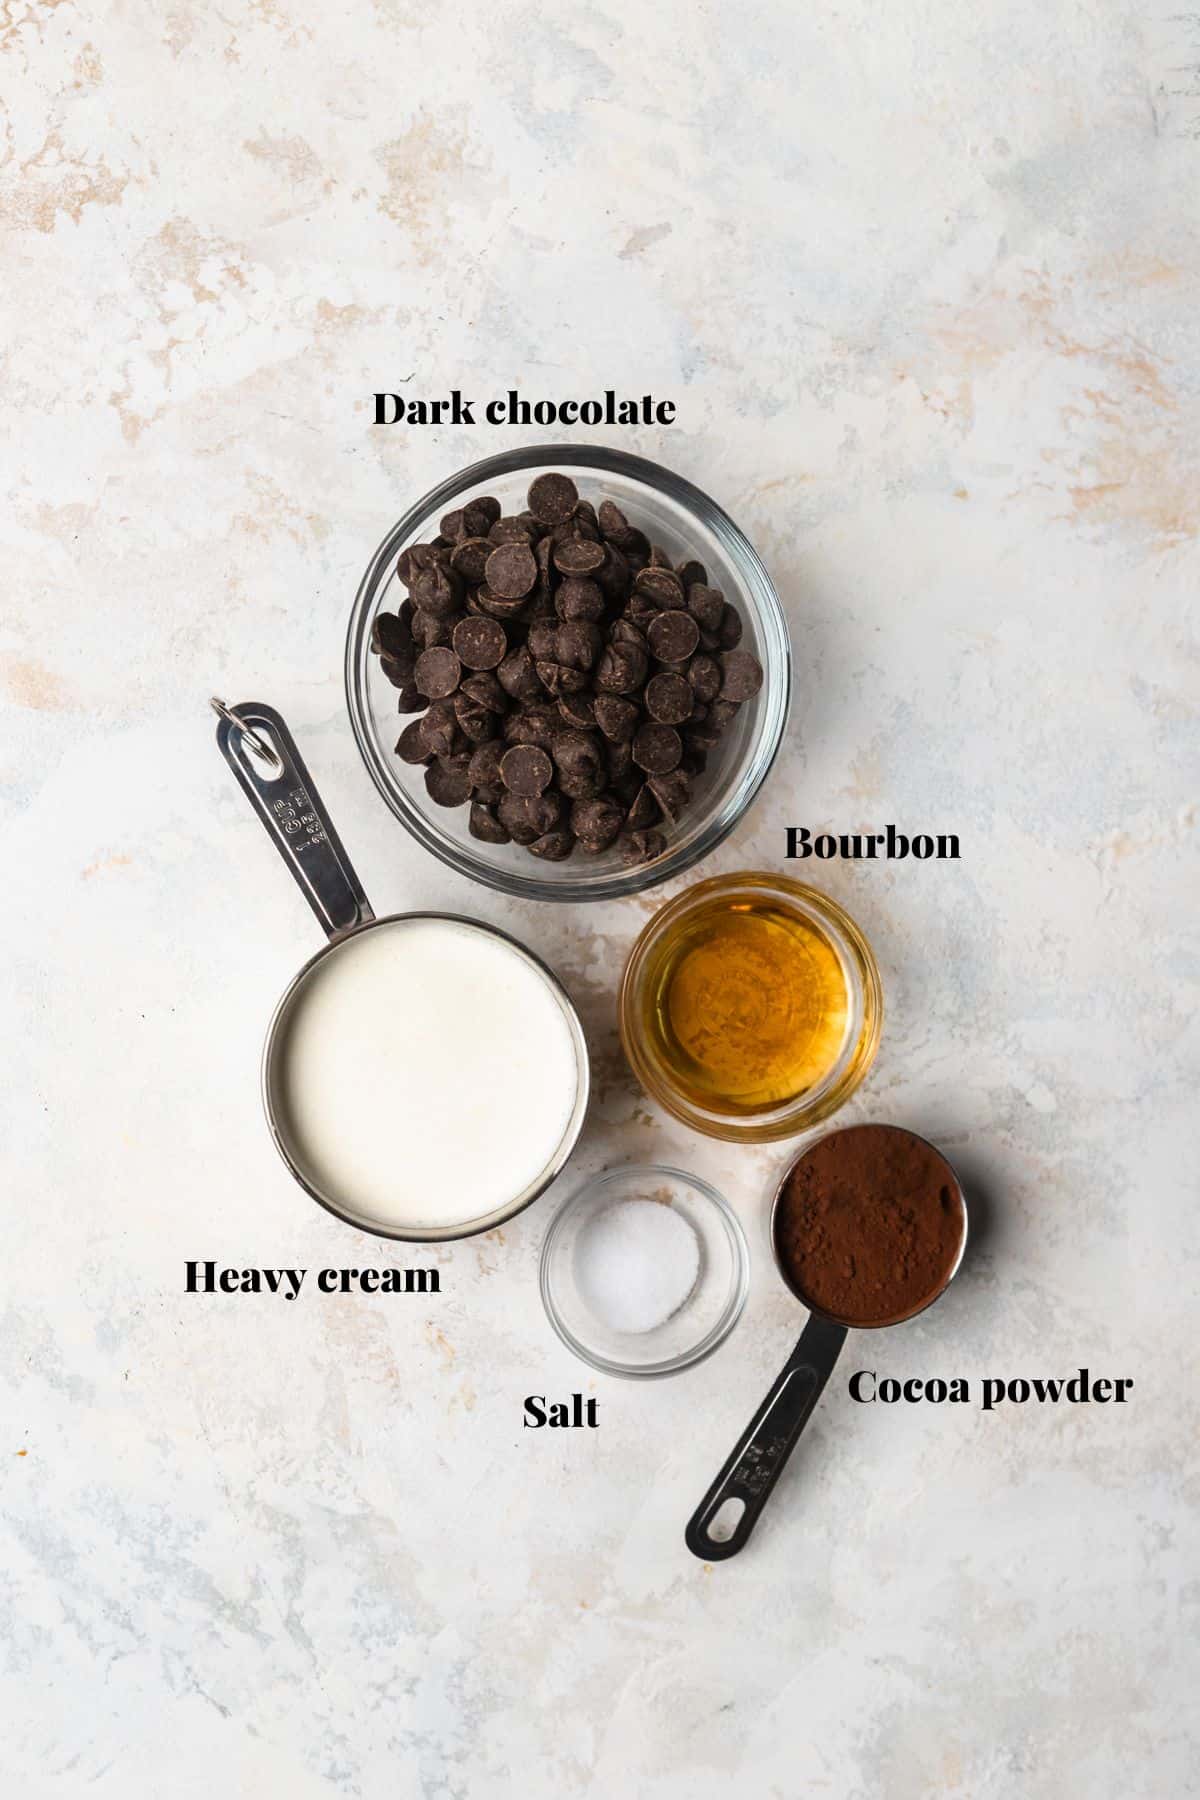 Ingredients to make boozy chocolate truffles.